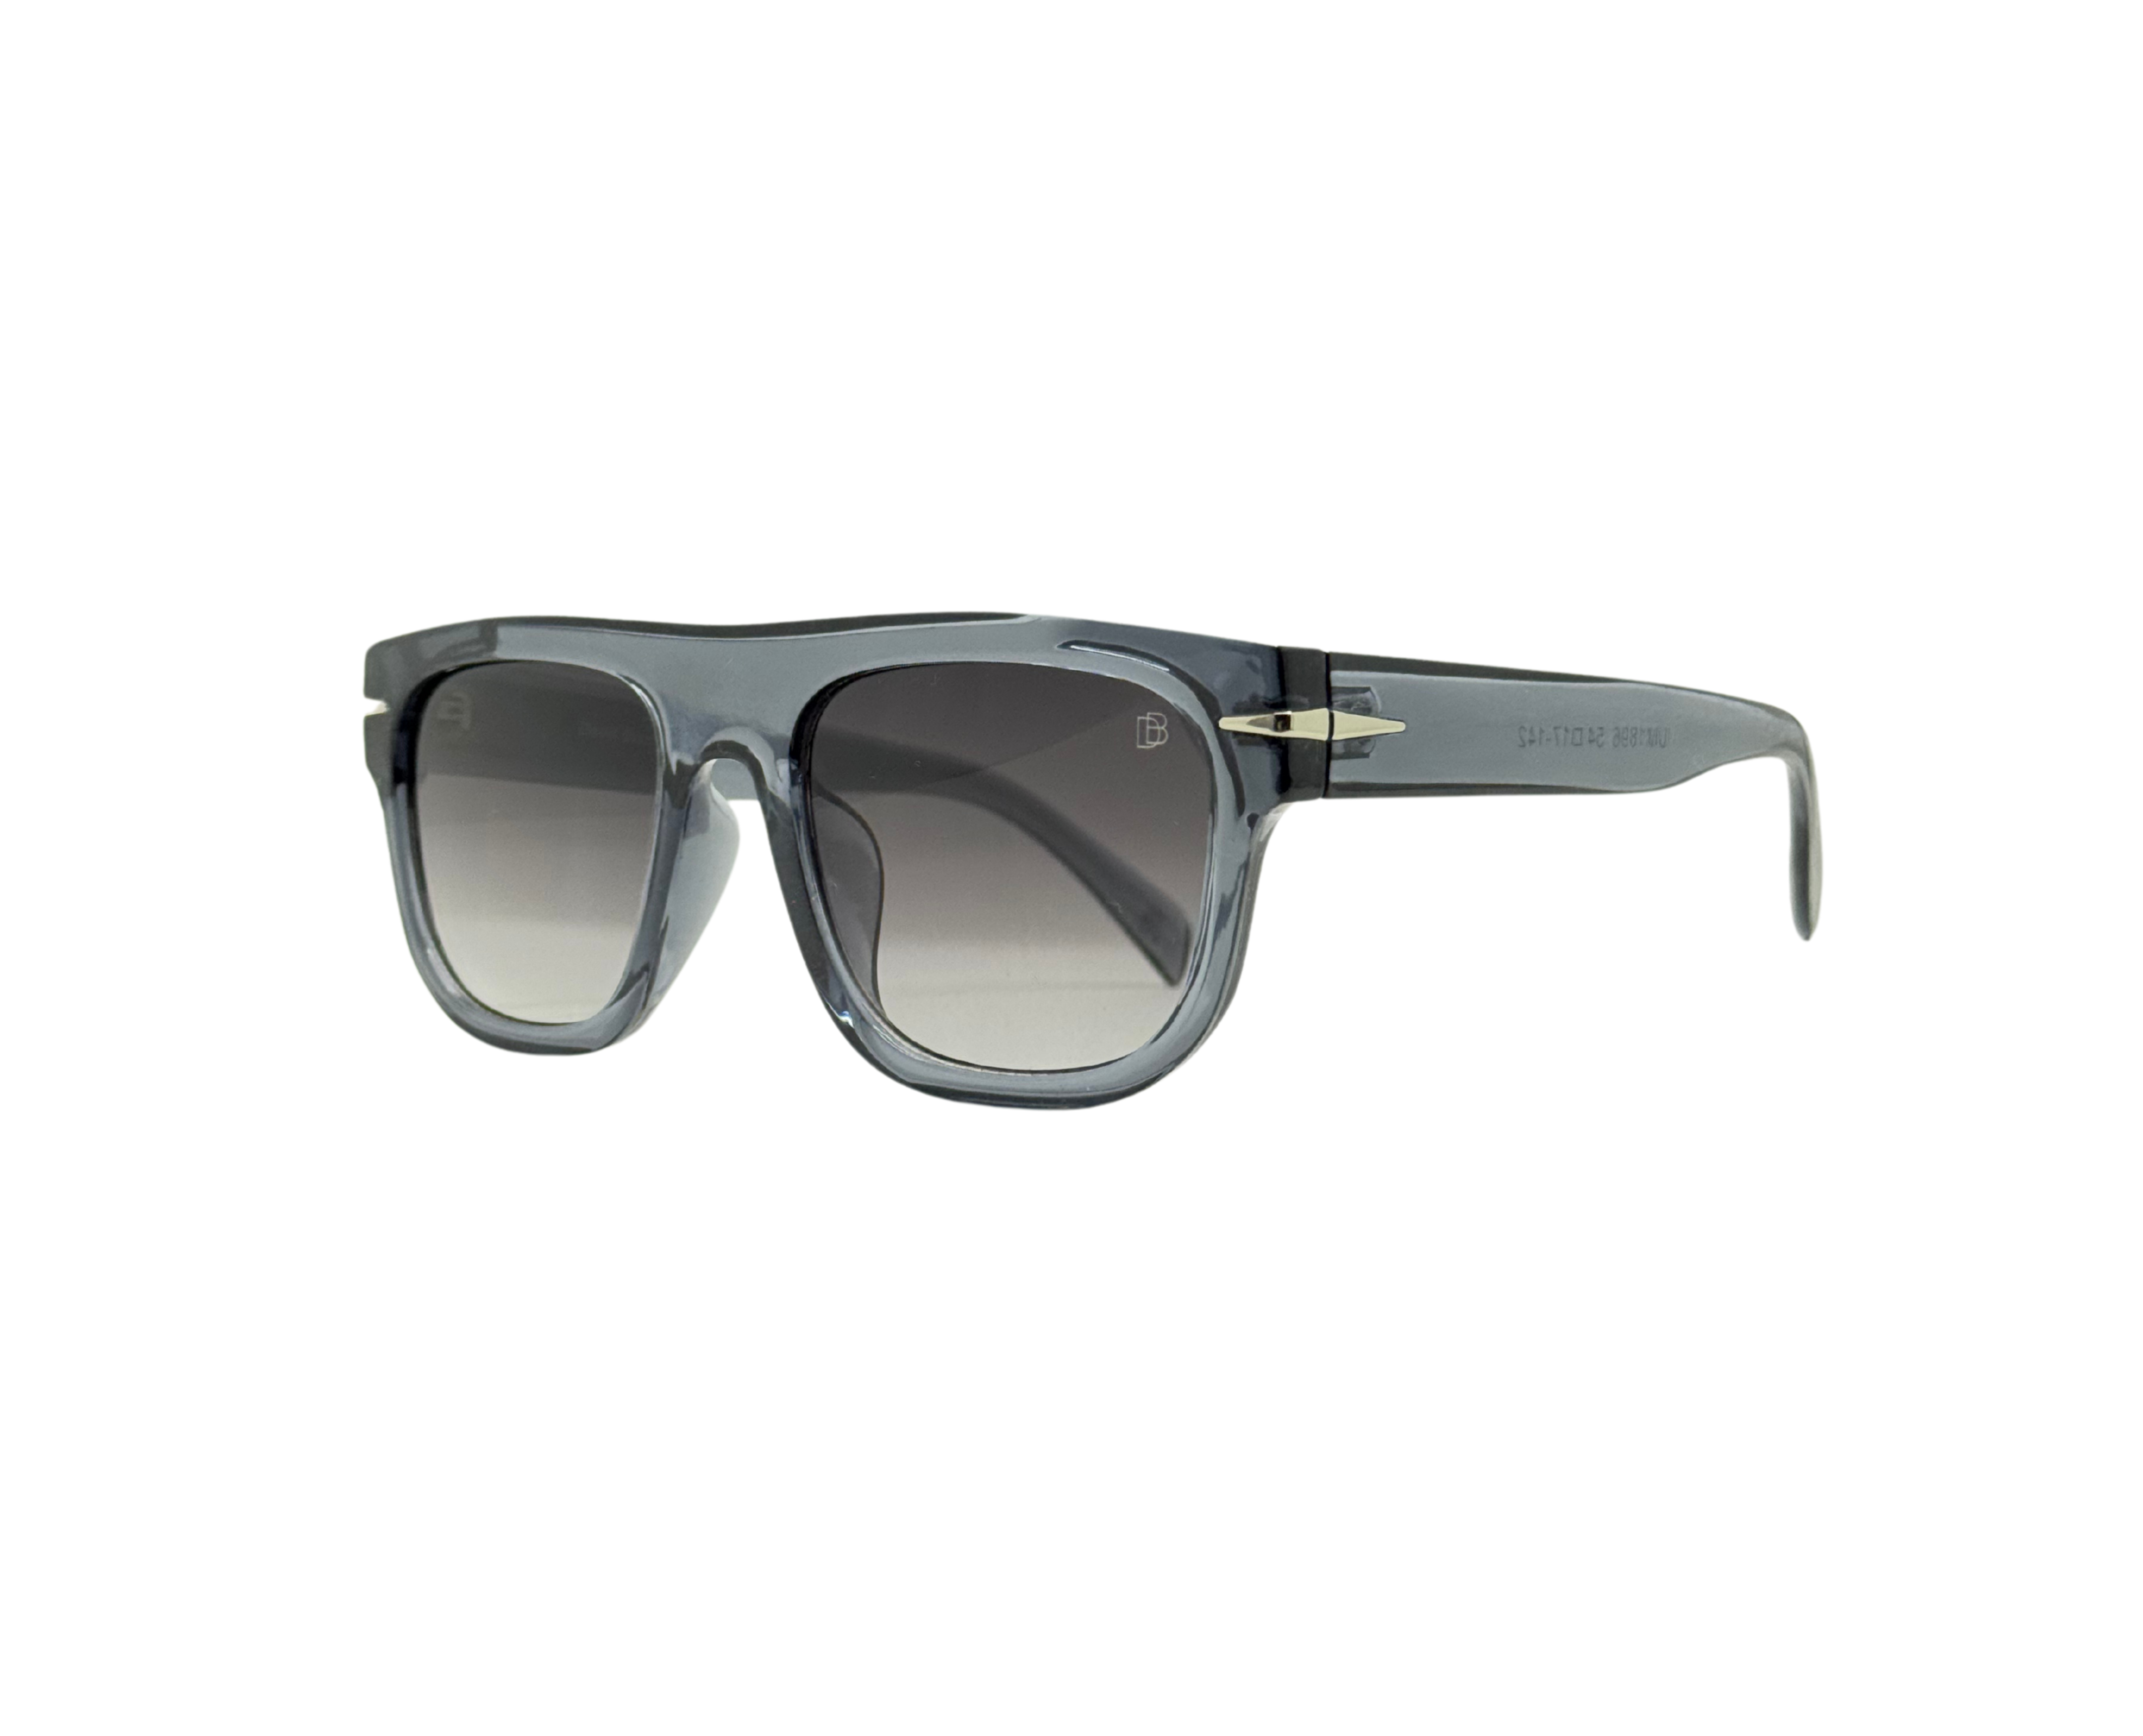 NS Deluxe - 1896 - Grey - Sunglasses